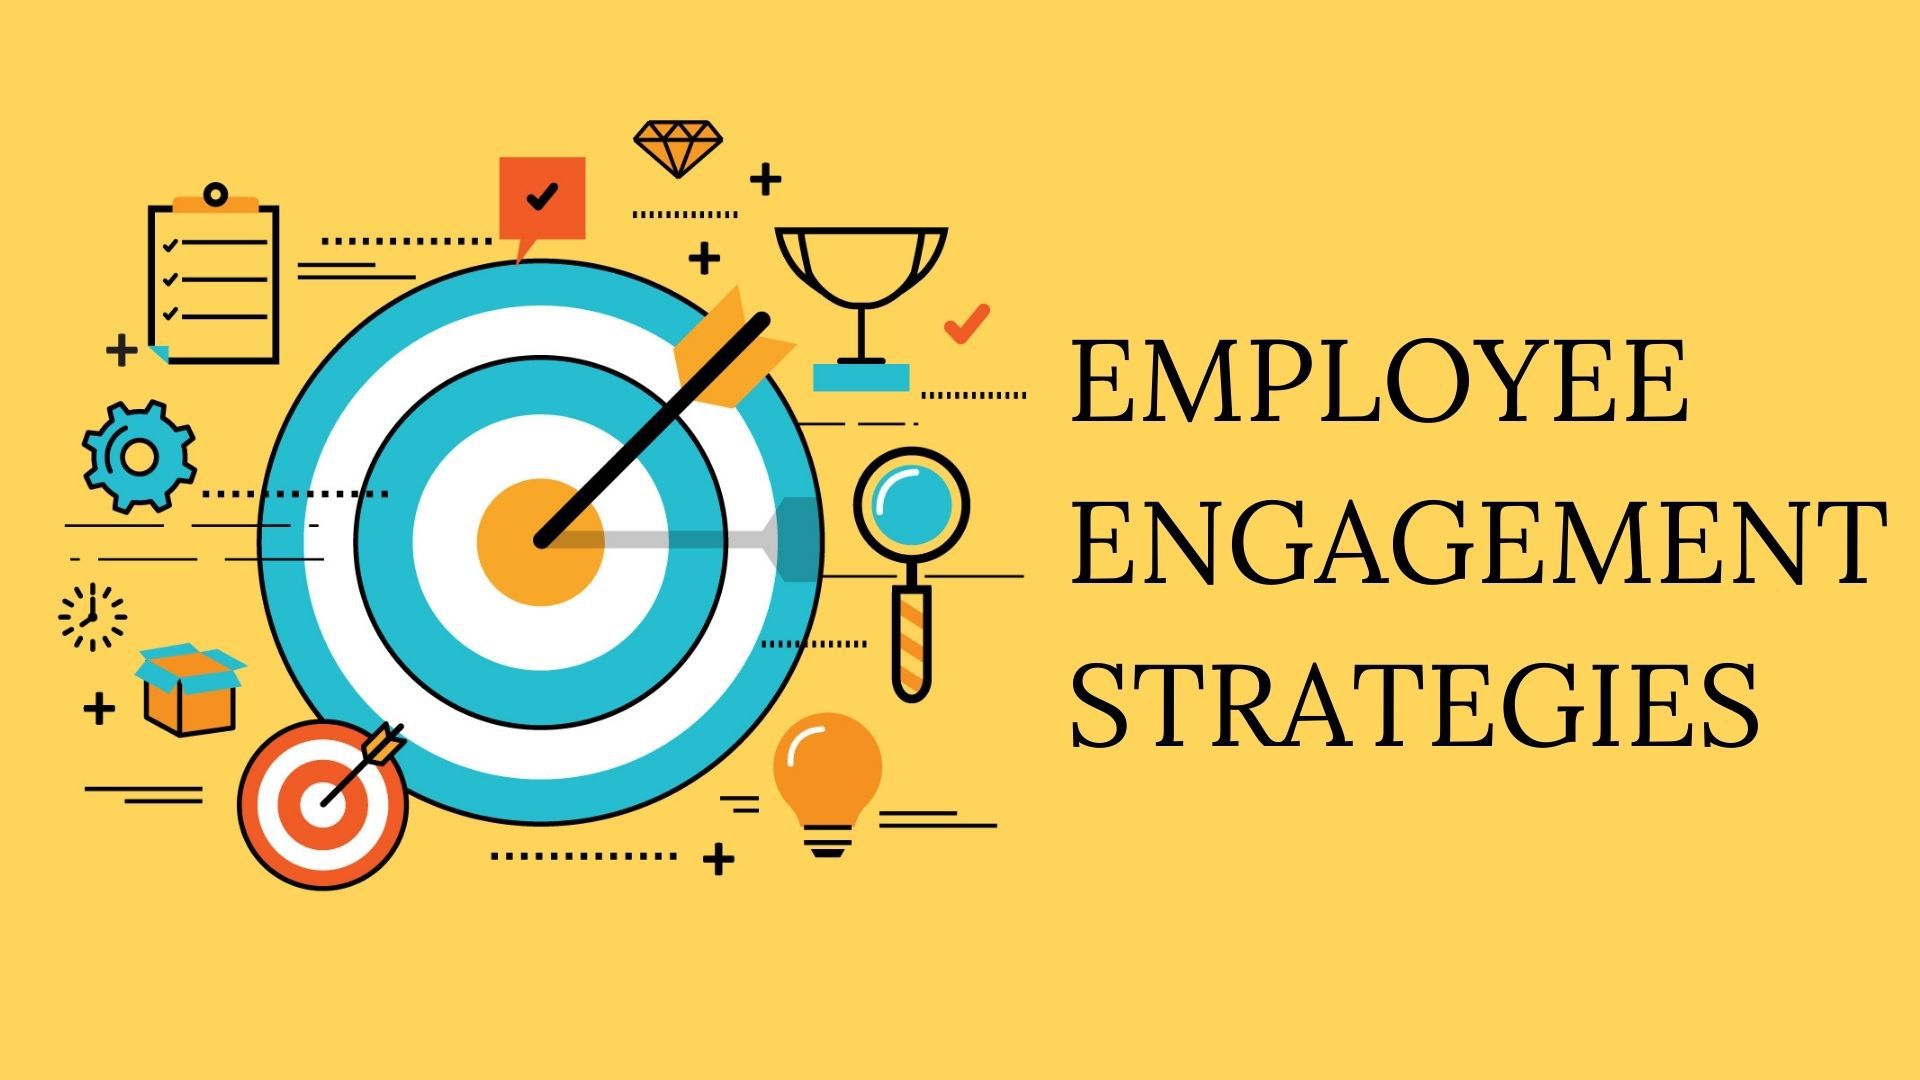 business engagement strategies